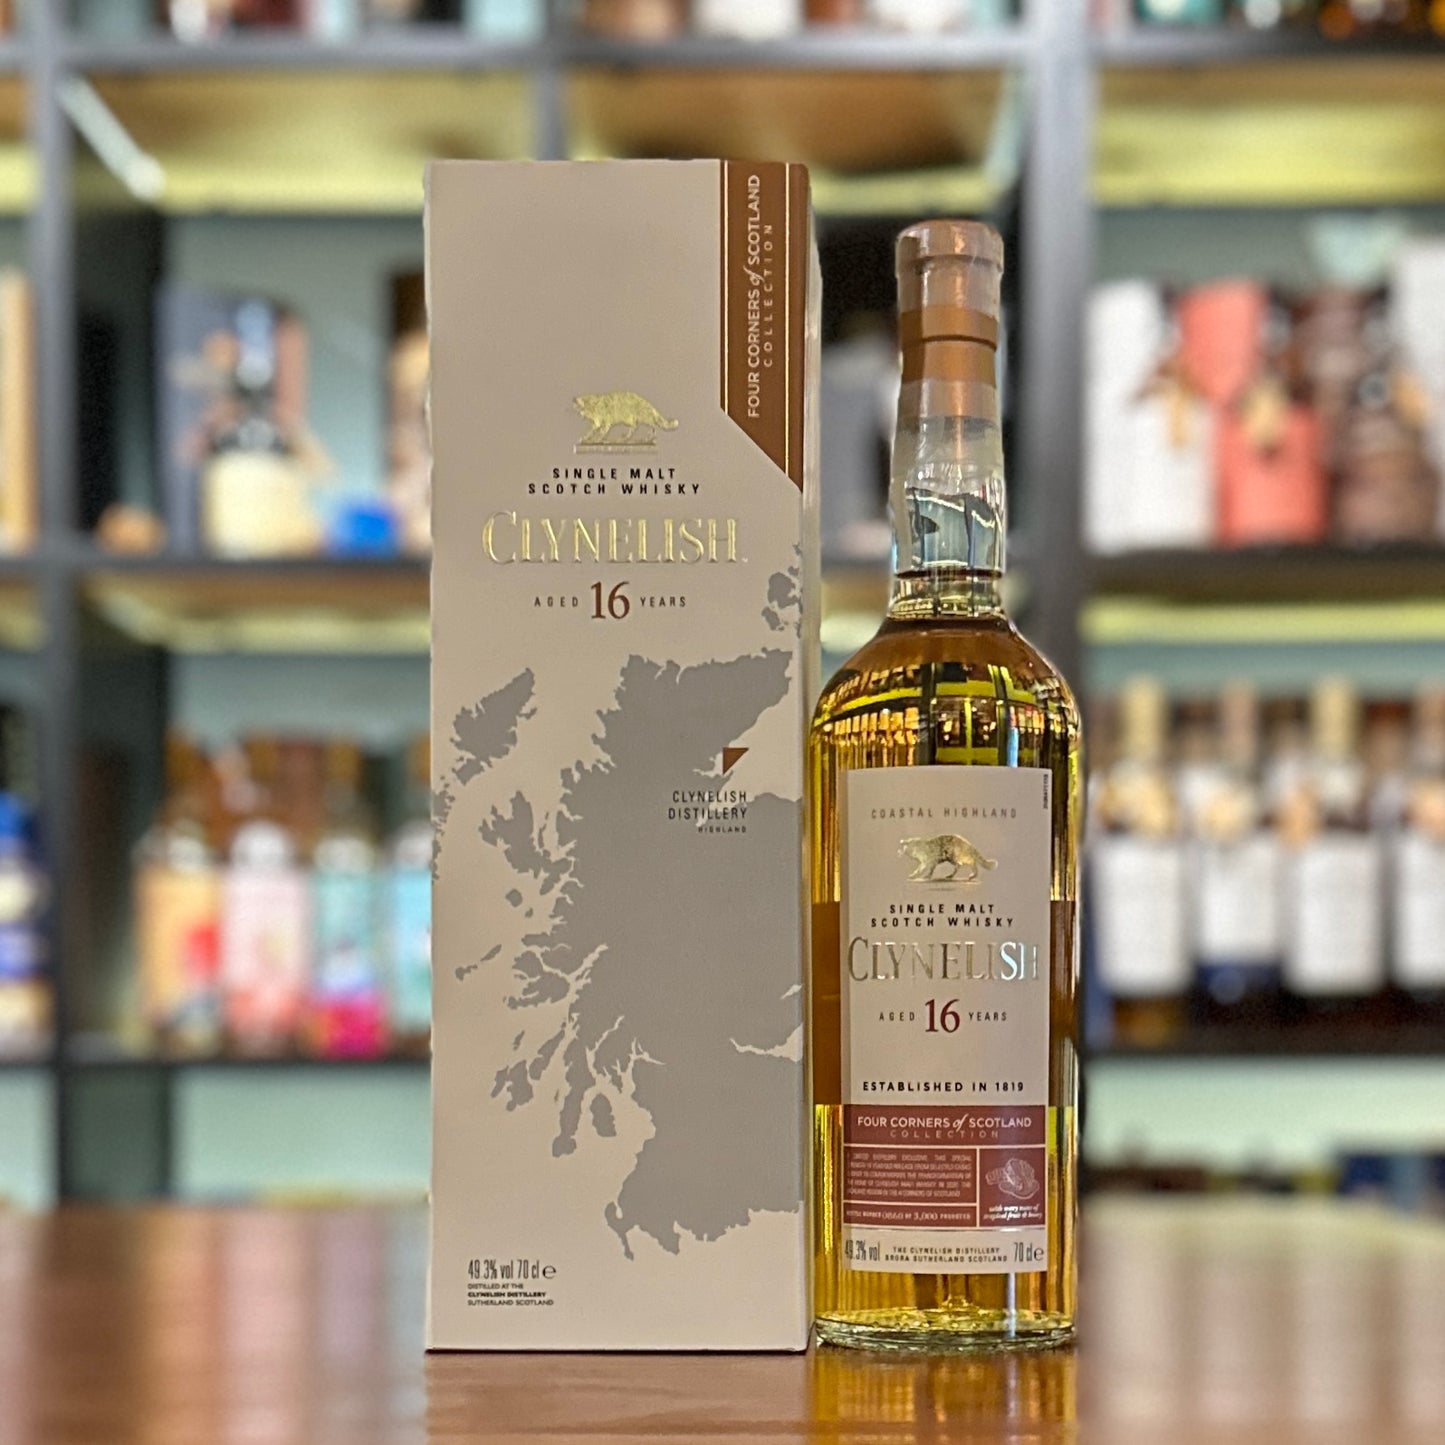 Clynelish 16 Year Old “The Four Corners of Scotland” Single Malt Scotch Whisky